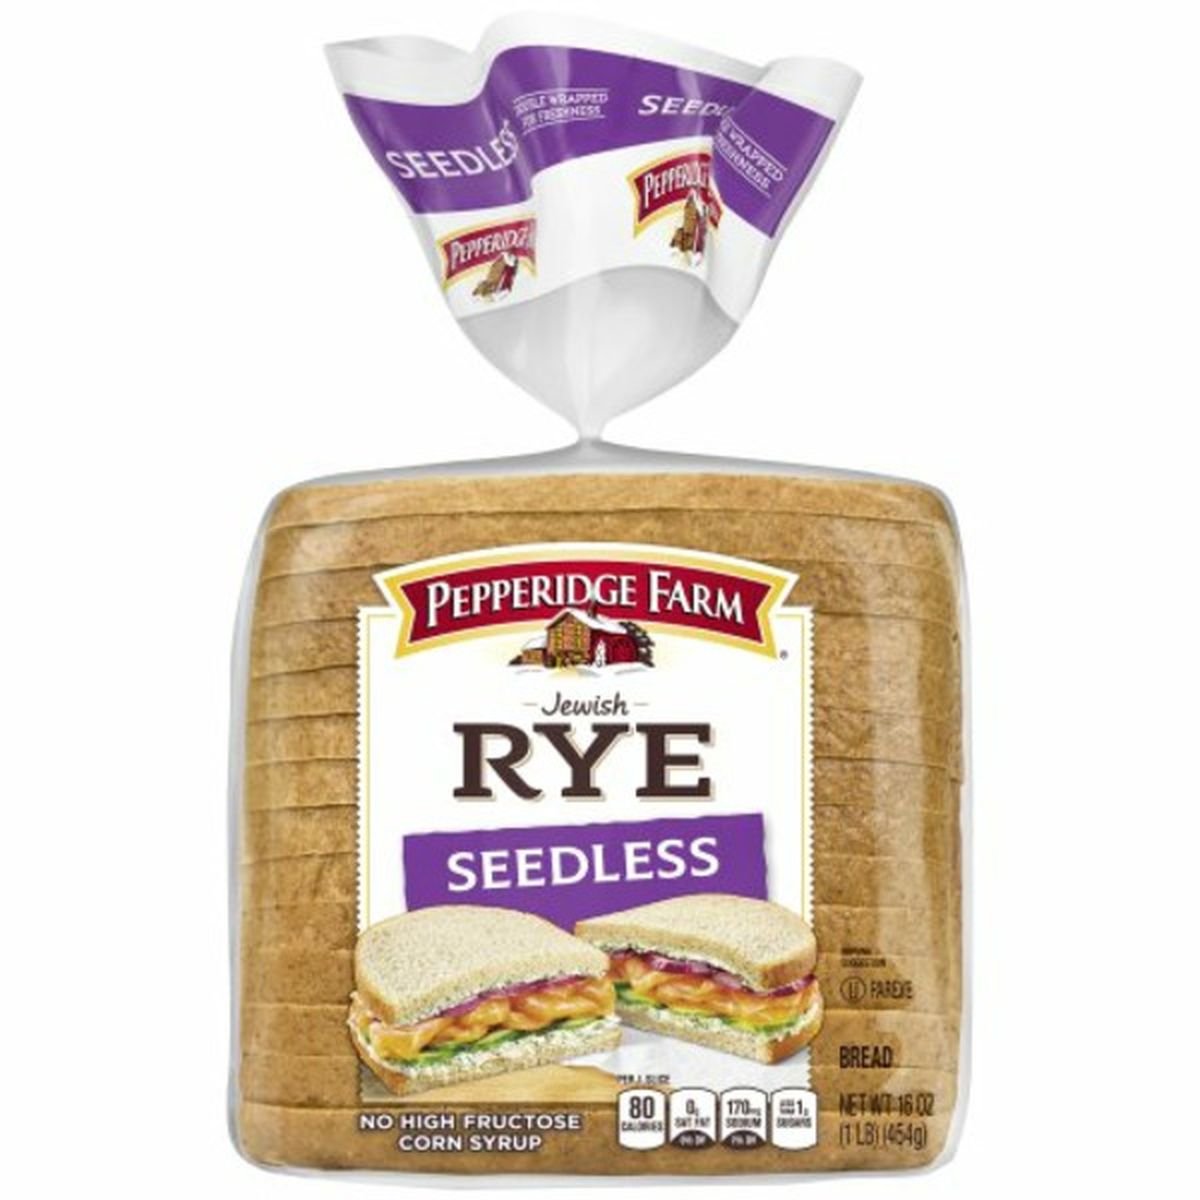 Calories in Pepperidge Farms  Jewish Rye Jewish Rye Seedless Rye Bread